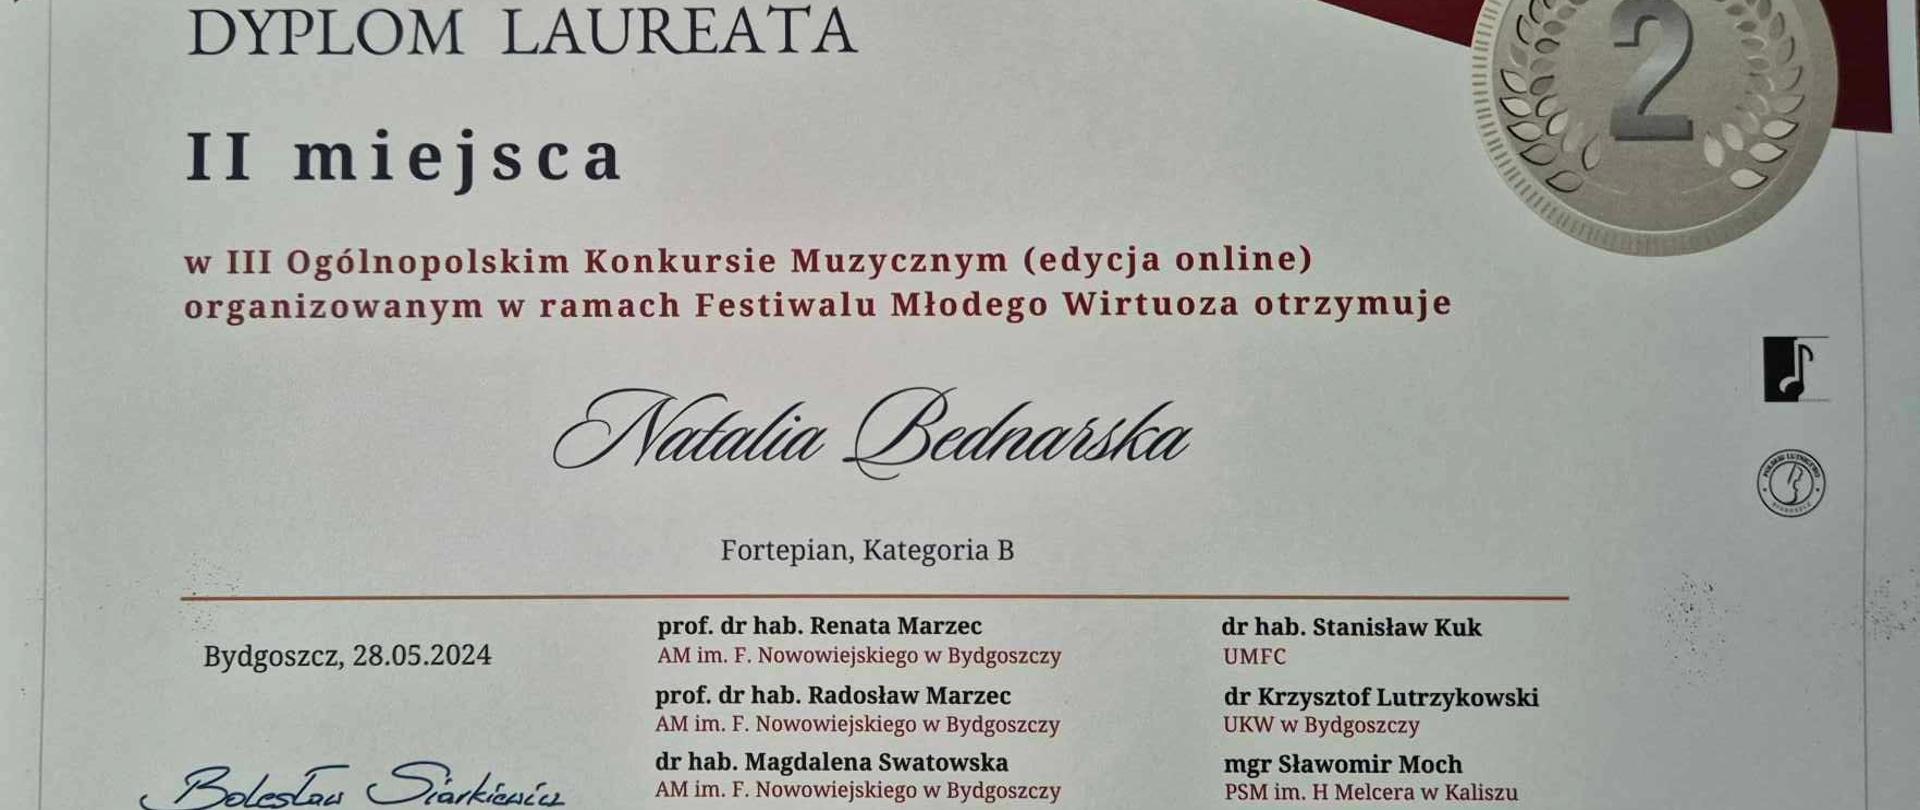 Ogólnopolski Konkurs on-line - dyplom